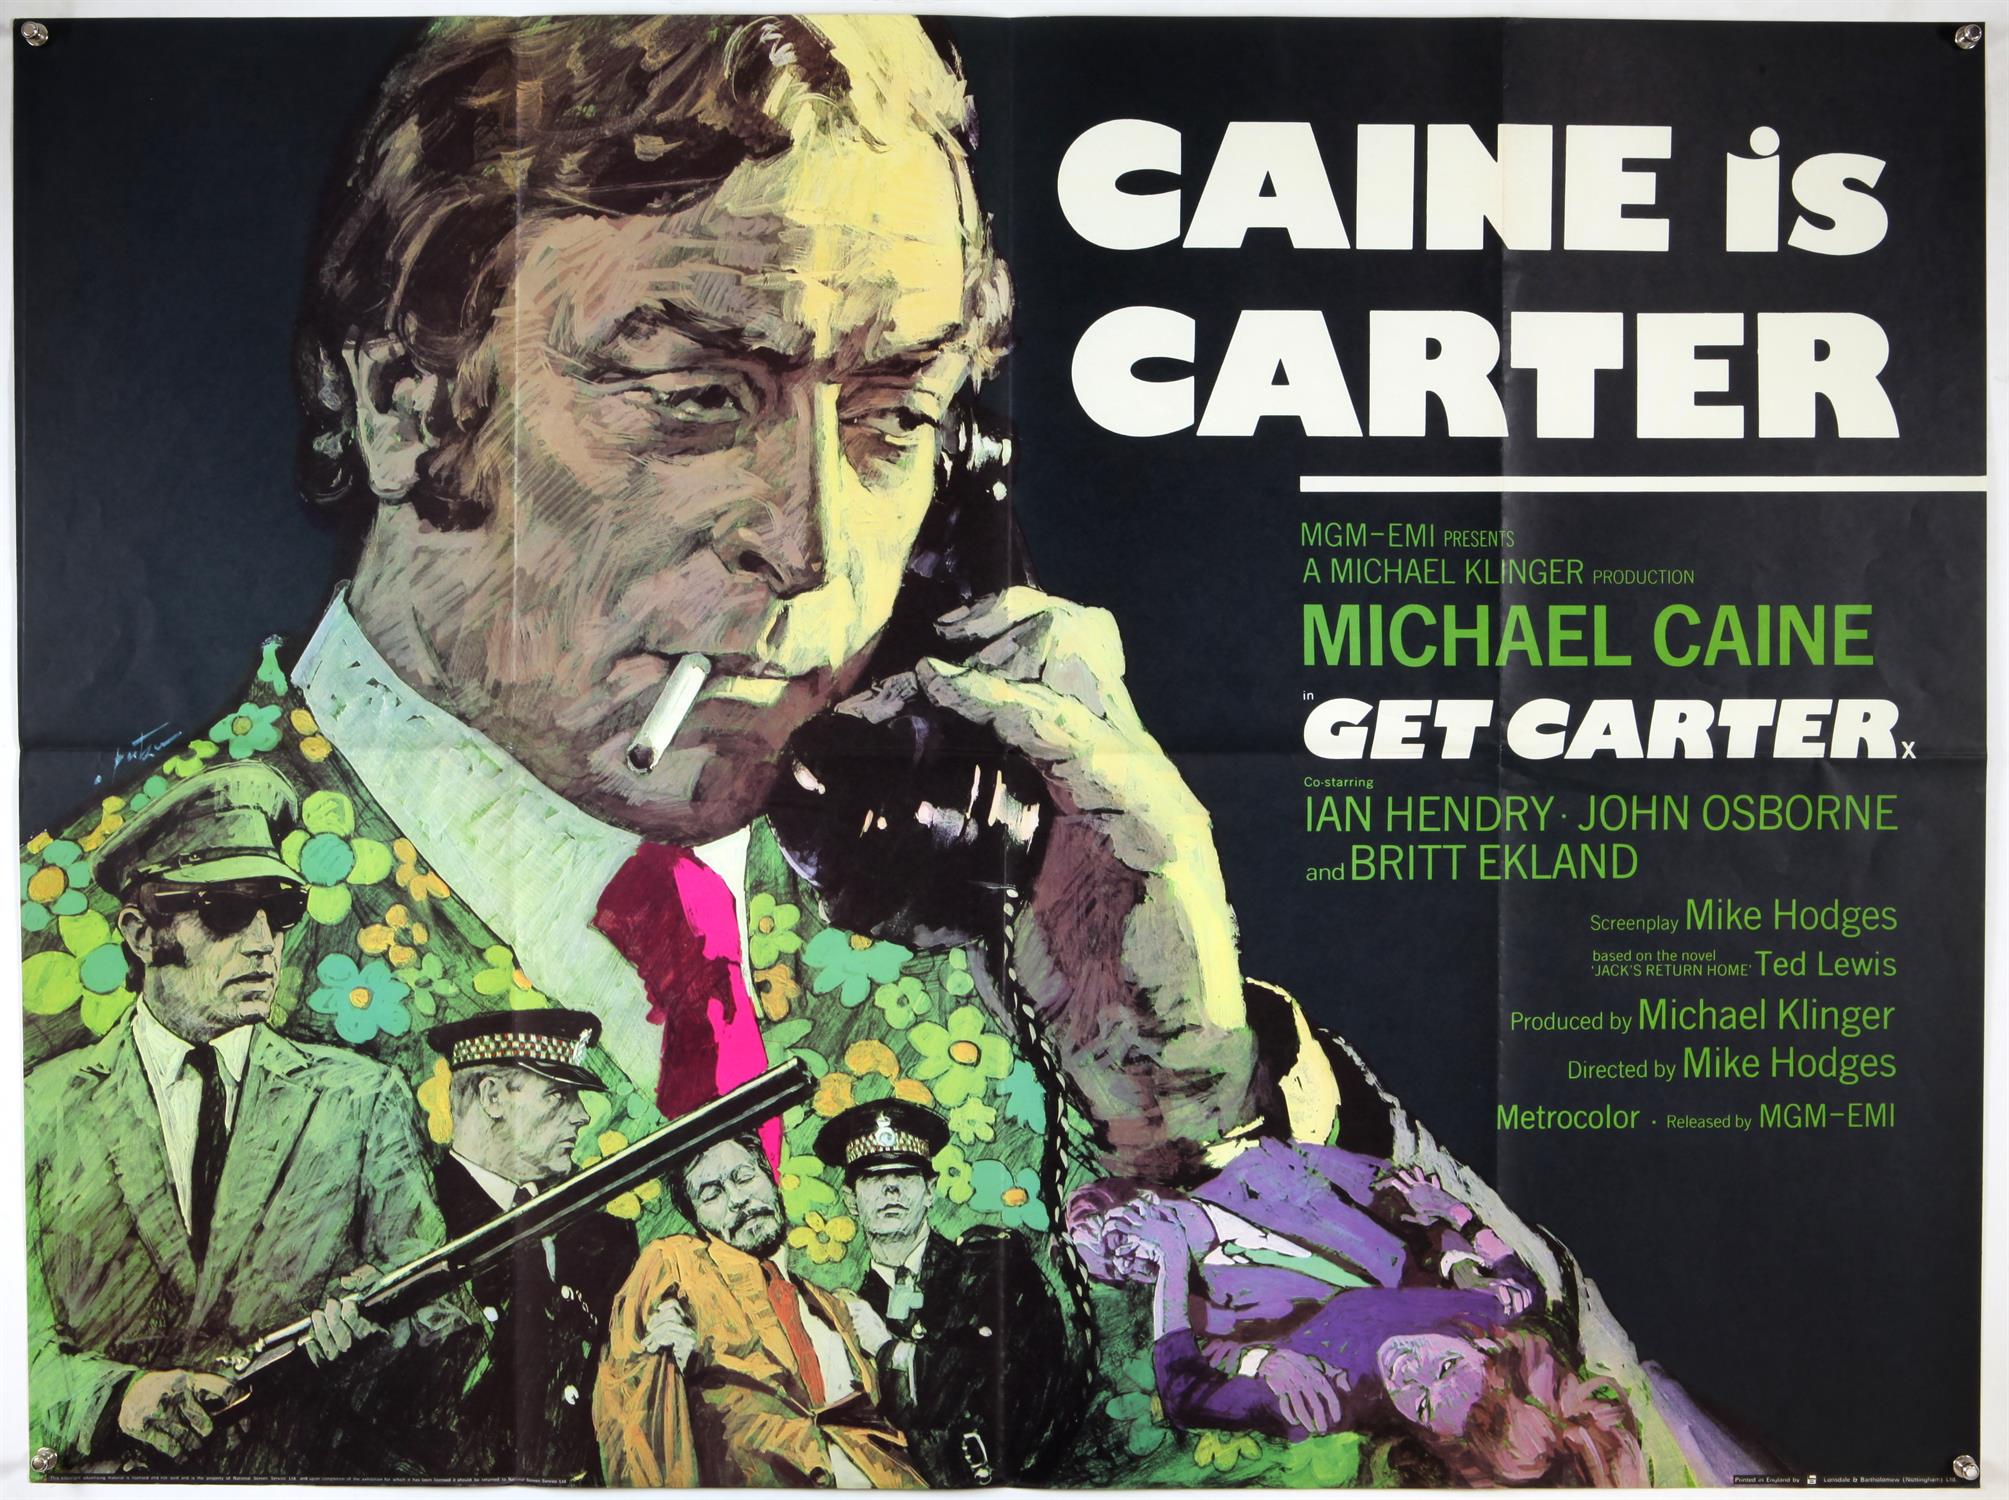 Get Carter (1971) British Quad film poster, starring Michael Caine as Jack Carter,